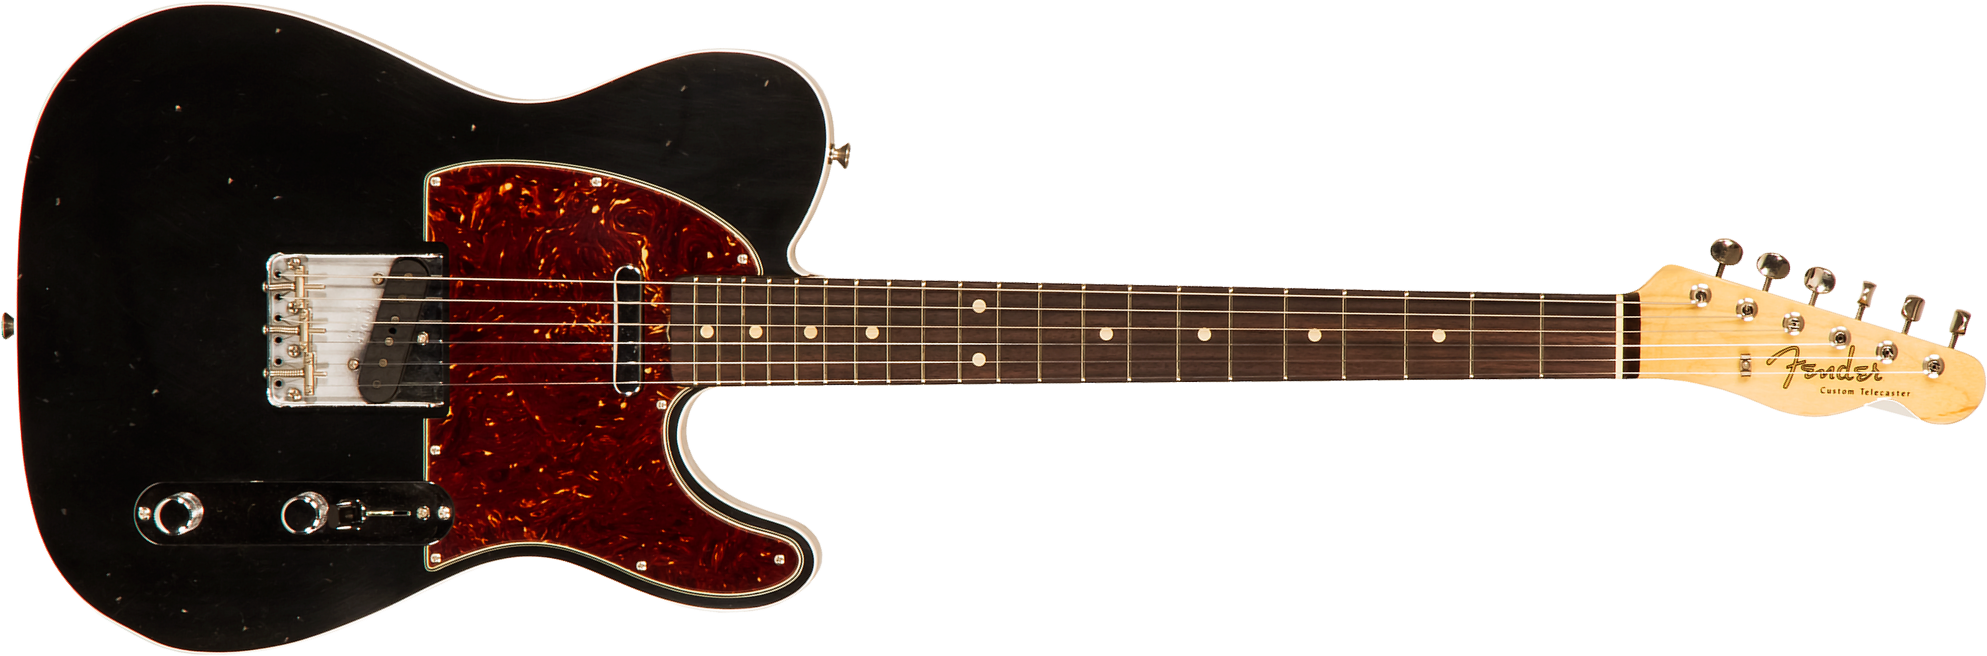 Fender Custom Shop Tele 1960 2s Ht Rw #r114759 - Journeyman Relic Black - Tel shape electric guitar - Main picture